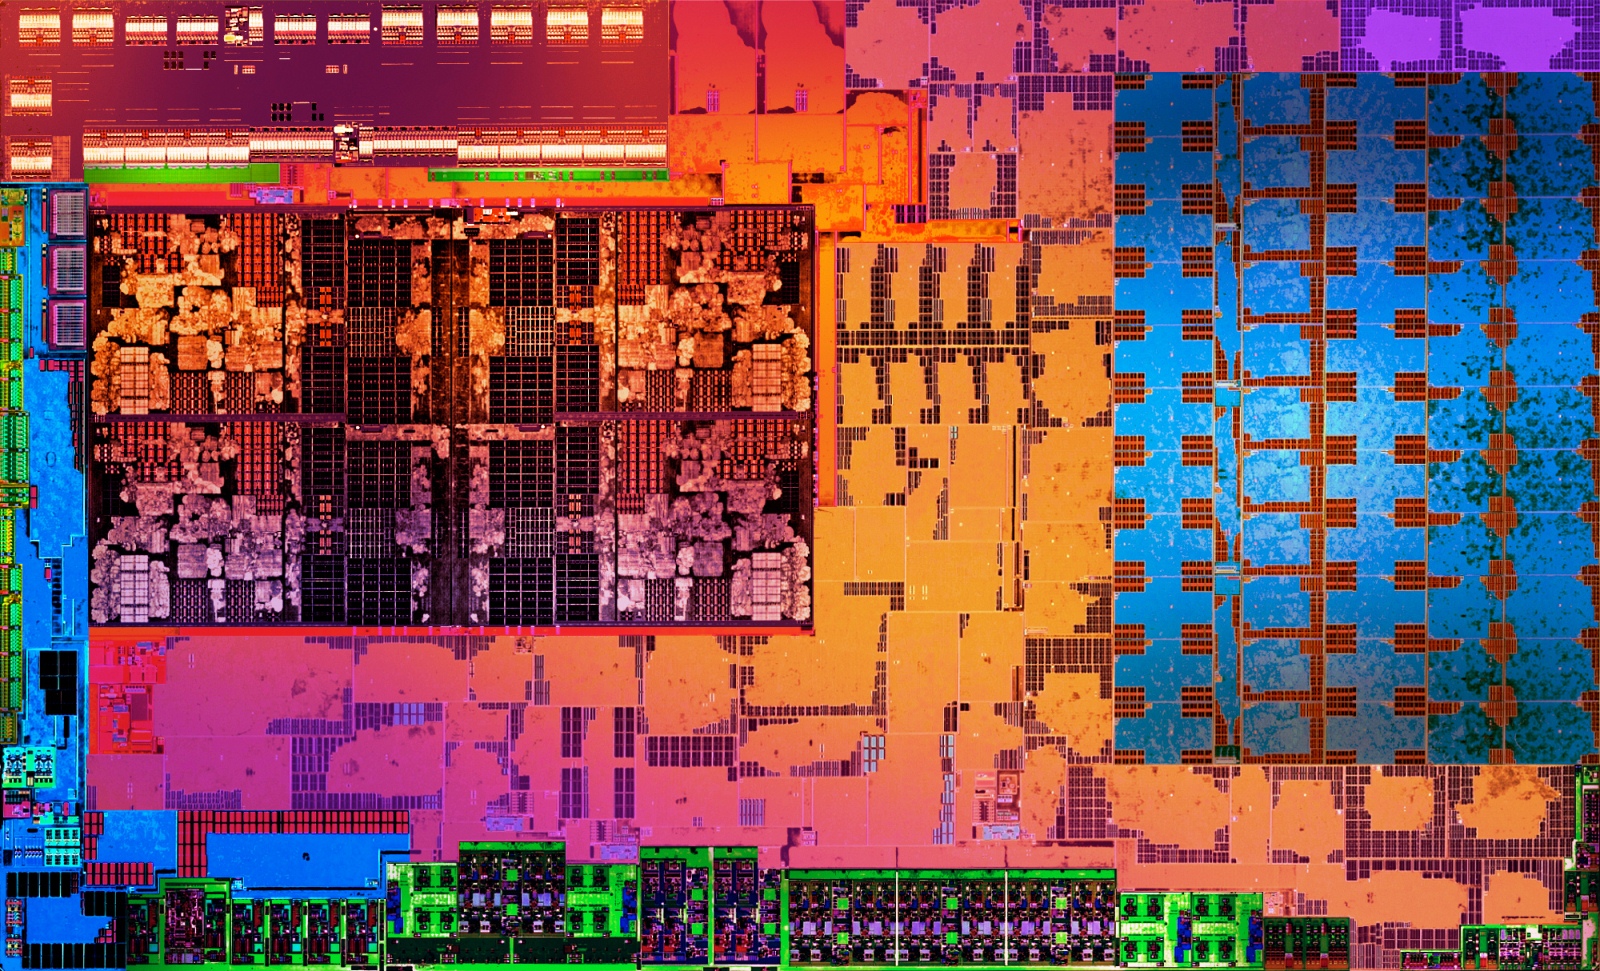 amd ryzen processor with radeon vega graphics die shot AMD เปิดตัว Ryzen Mobile โปรเซสเซอร์ใหม่ที่เป็นขุมพลังสำหรับ Ultrathin Notebook1 ที่เร็วที่สุดในโลก